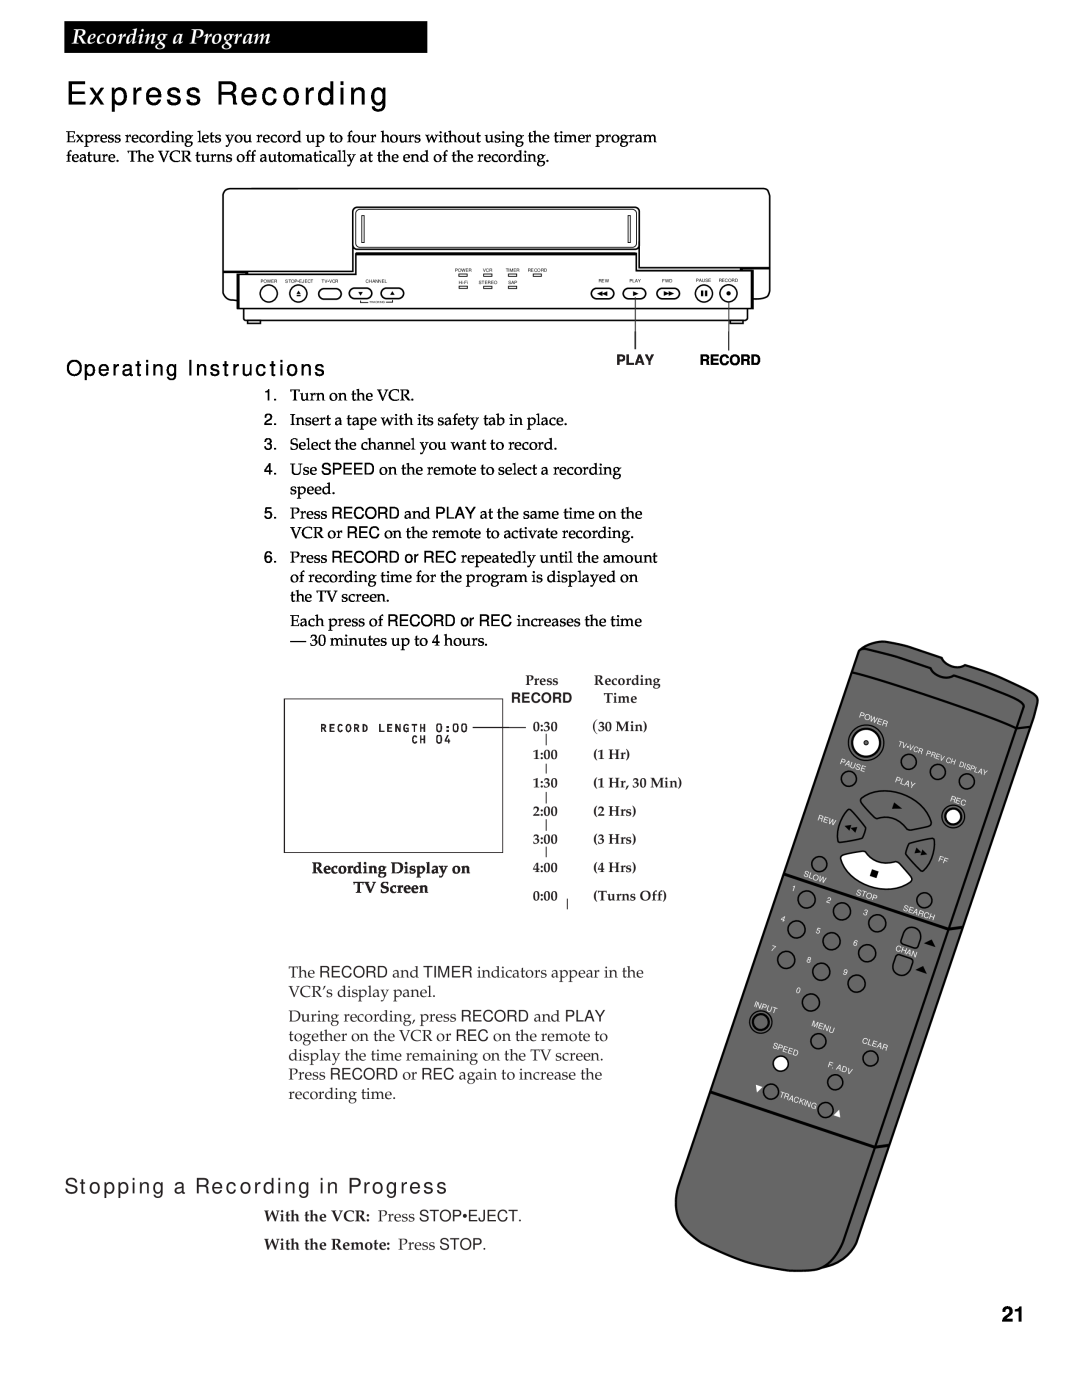 RCA VR602HF Express Recording, Operating Instructions, Stopping a Recording in Progress, Recording Display on TV Screen 